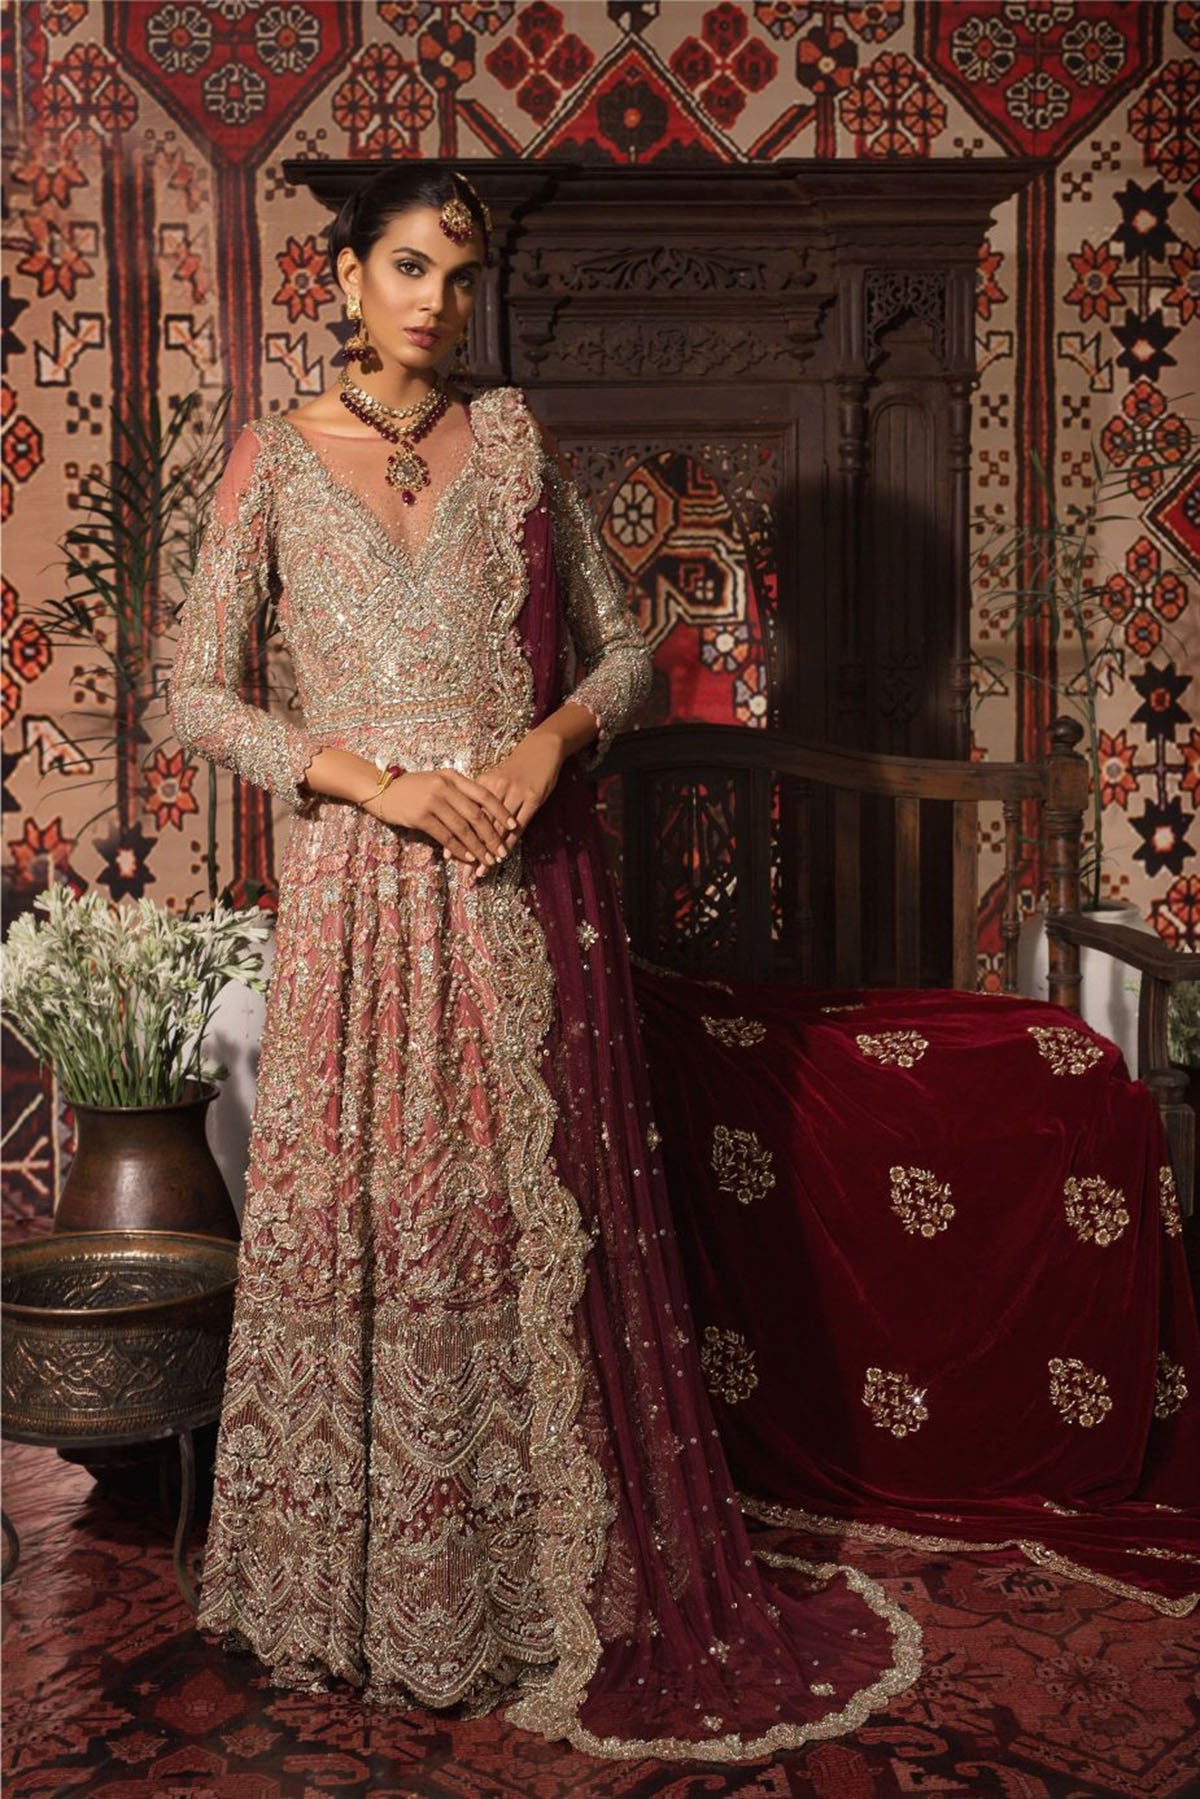 Menaal - Bridal Couture'23 by Saira Rizwan